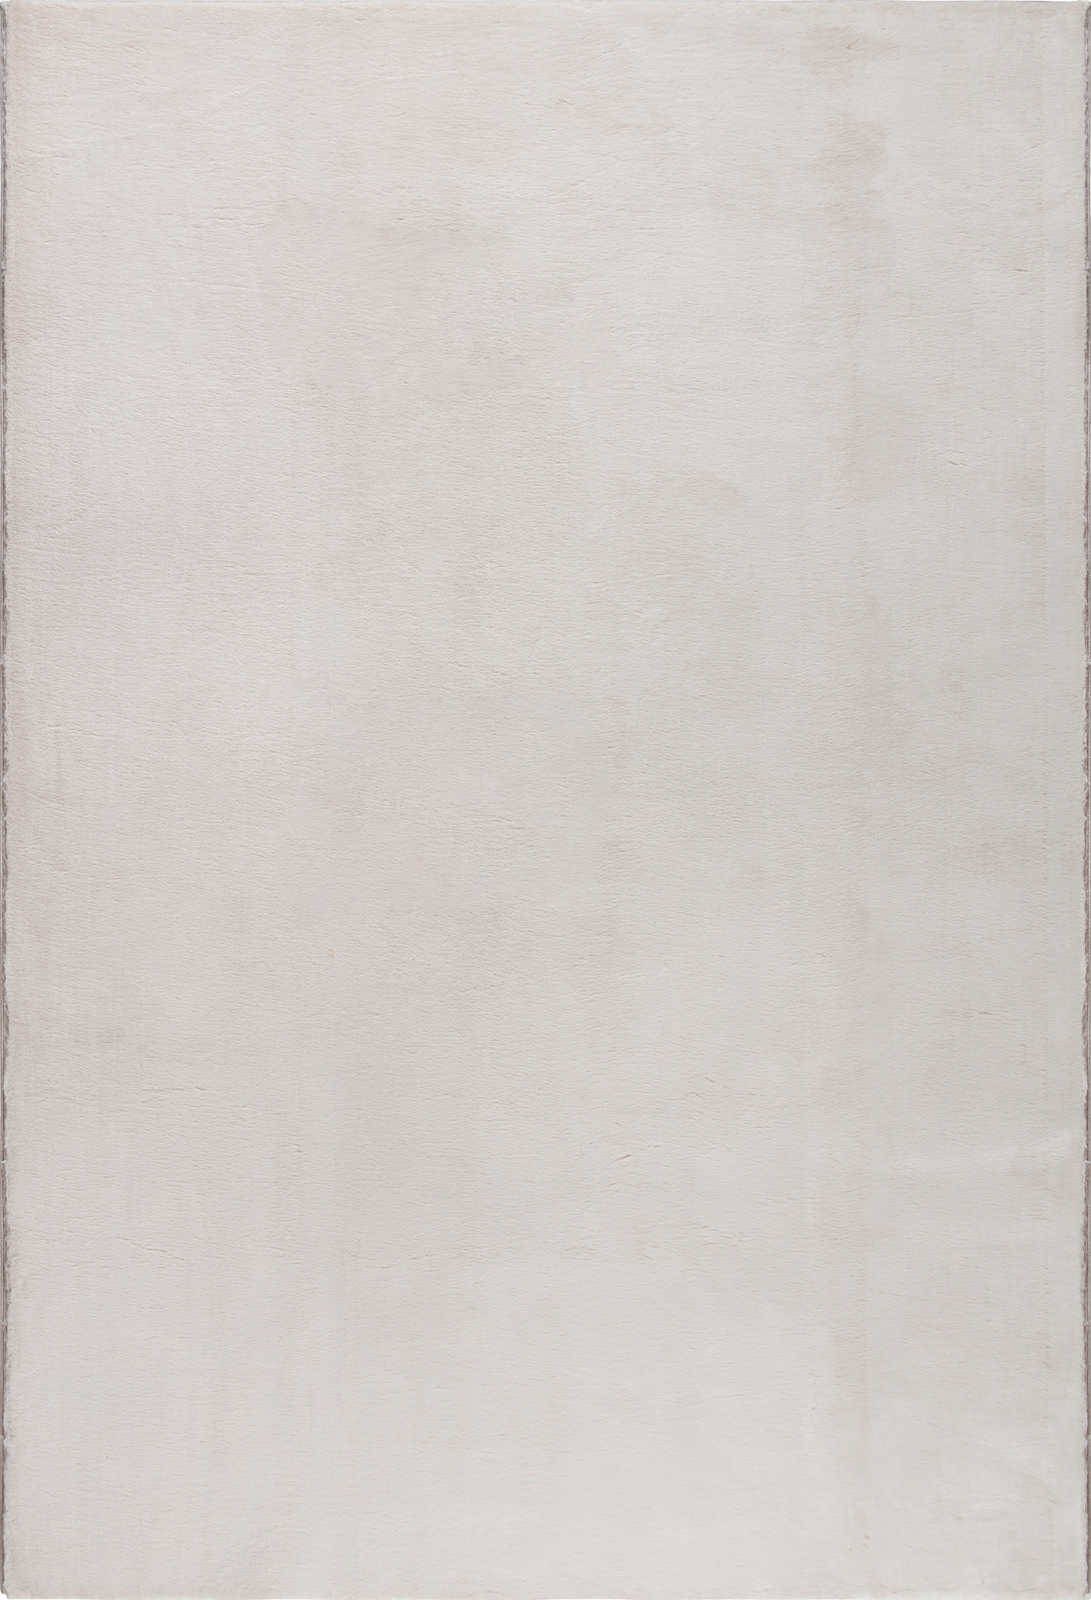             Knuffelzacht hoogpolig tapijt in lichtbeige - 290 x 200 cm
        